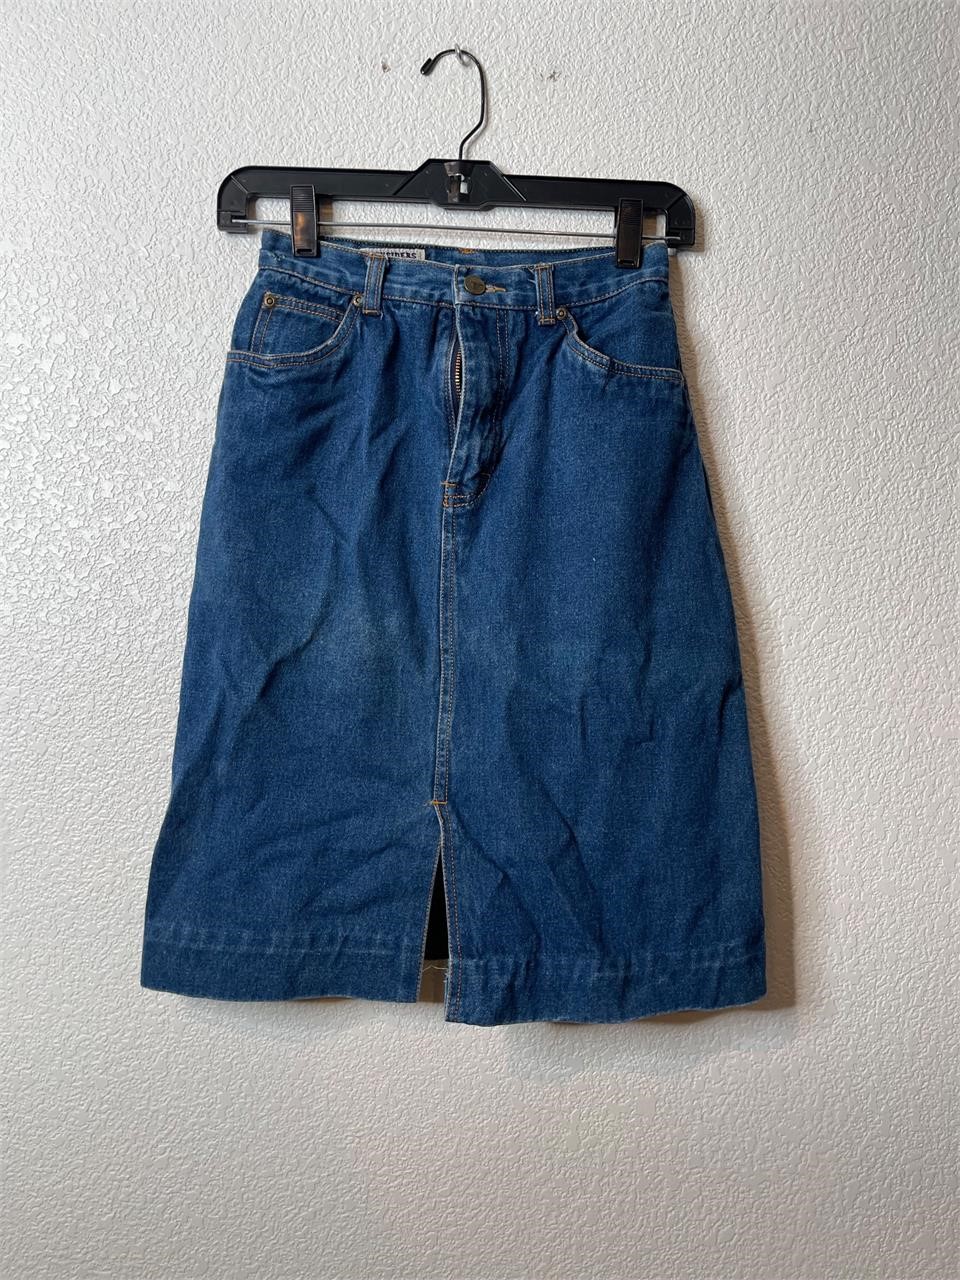 Vintage Backsiders Denim Skirt